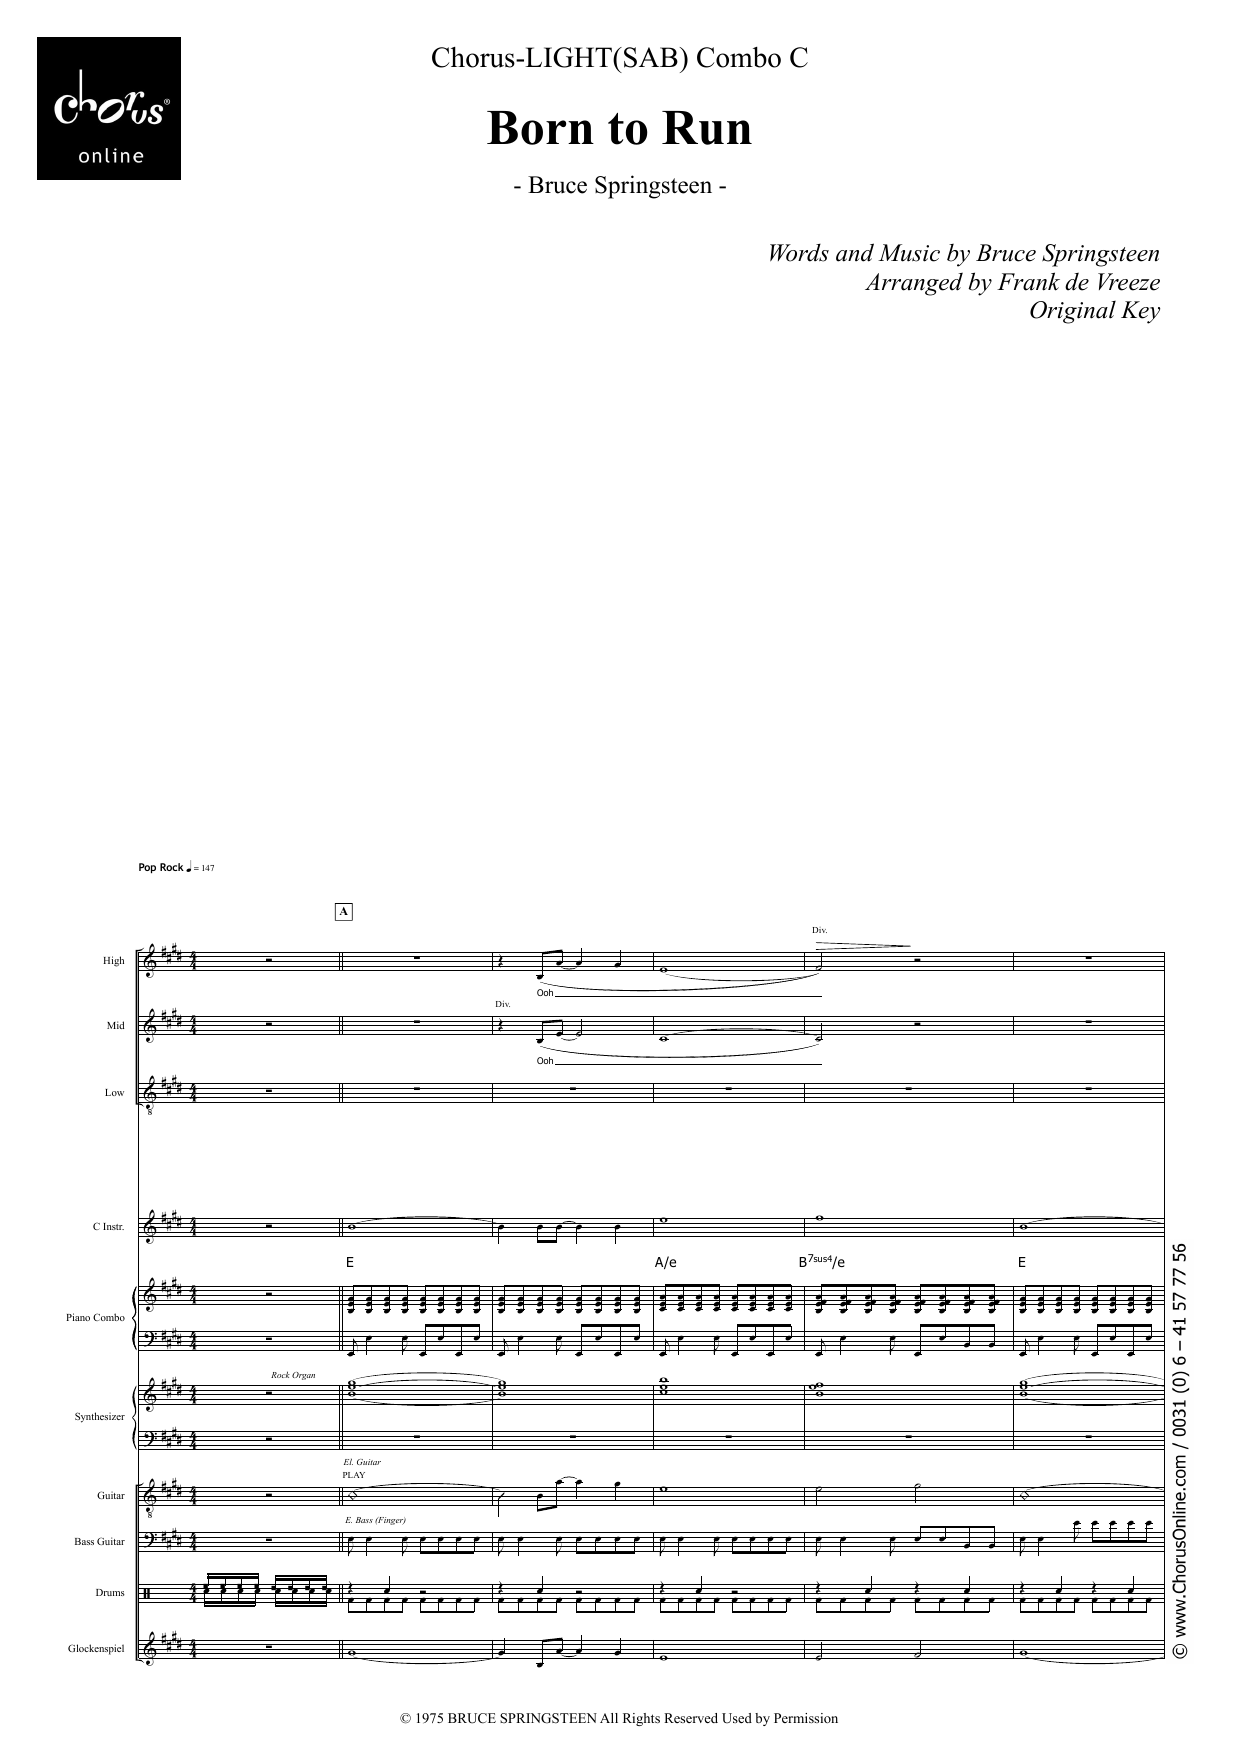 Bruce Springsteen Born to Run (arr. Frank de Vreeze) sheet music notes printable PDF score